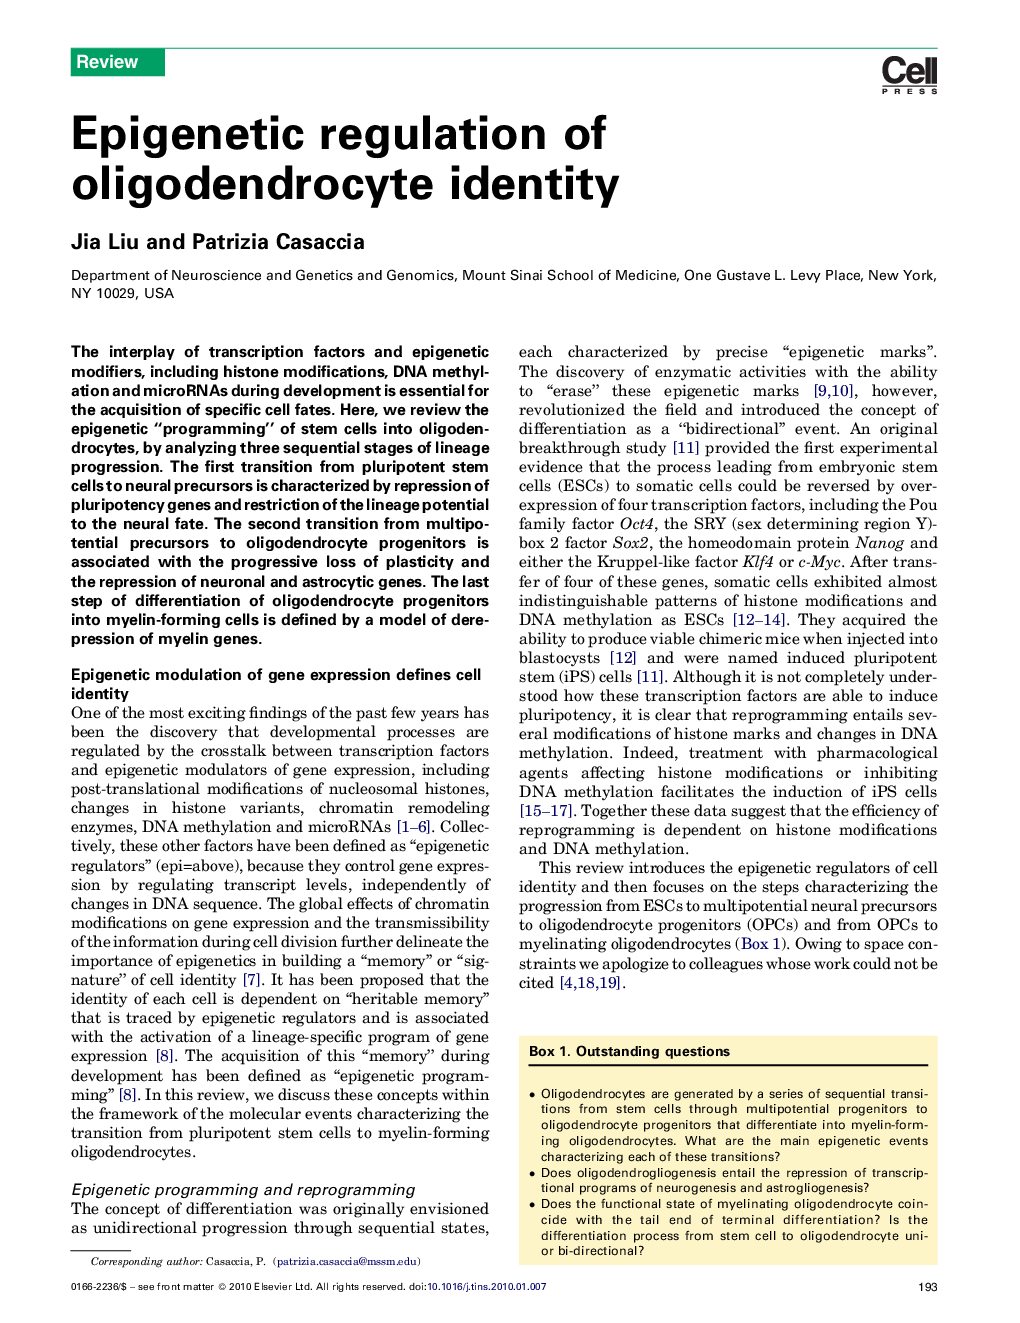 Epigenetic regulation of oligodendrocyte identity